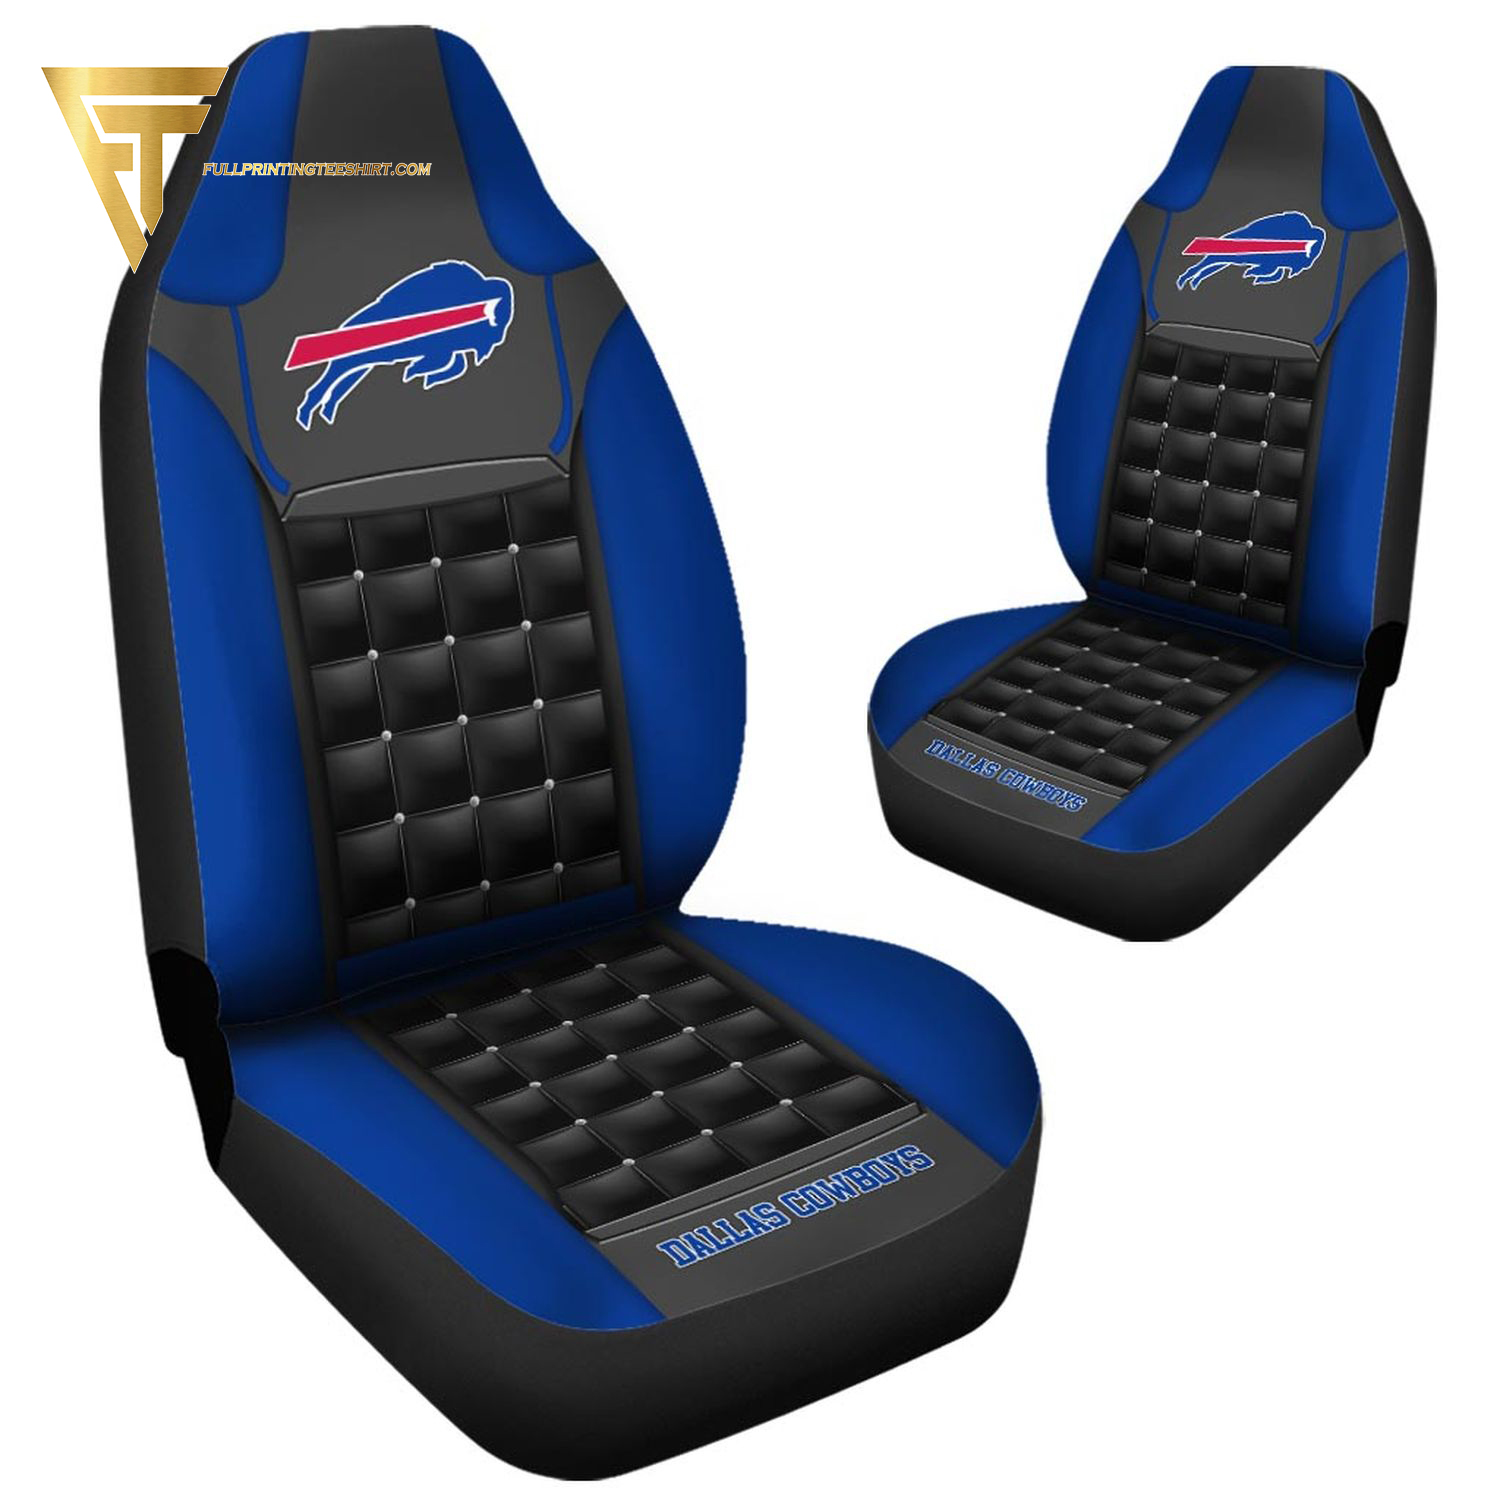 HOT NFL Buffalo Bills Gucci 3D Car Seat Cover - Express your